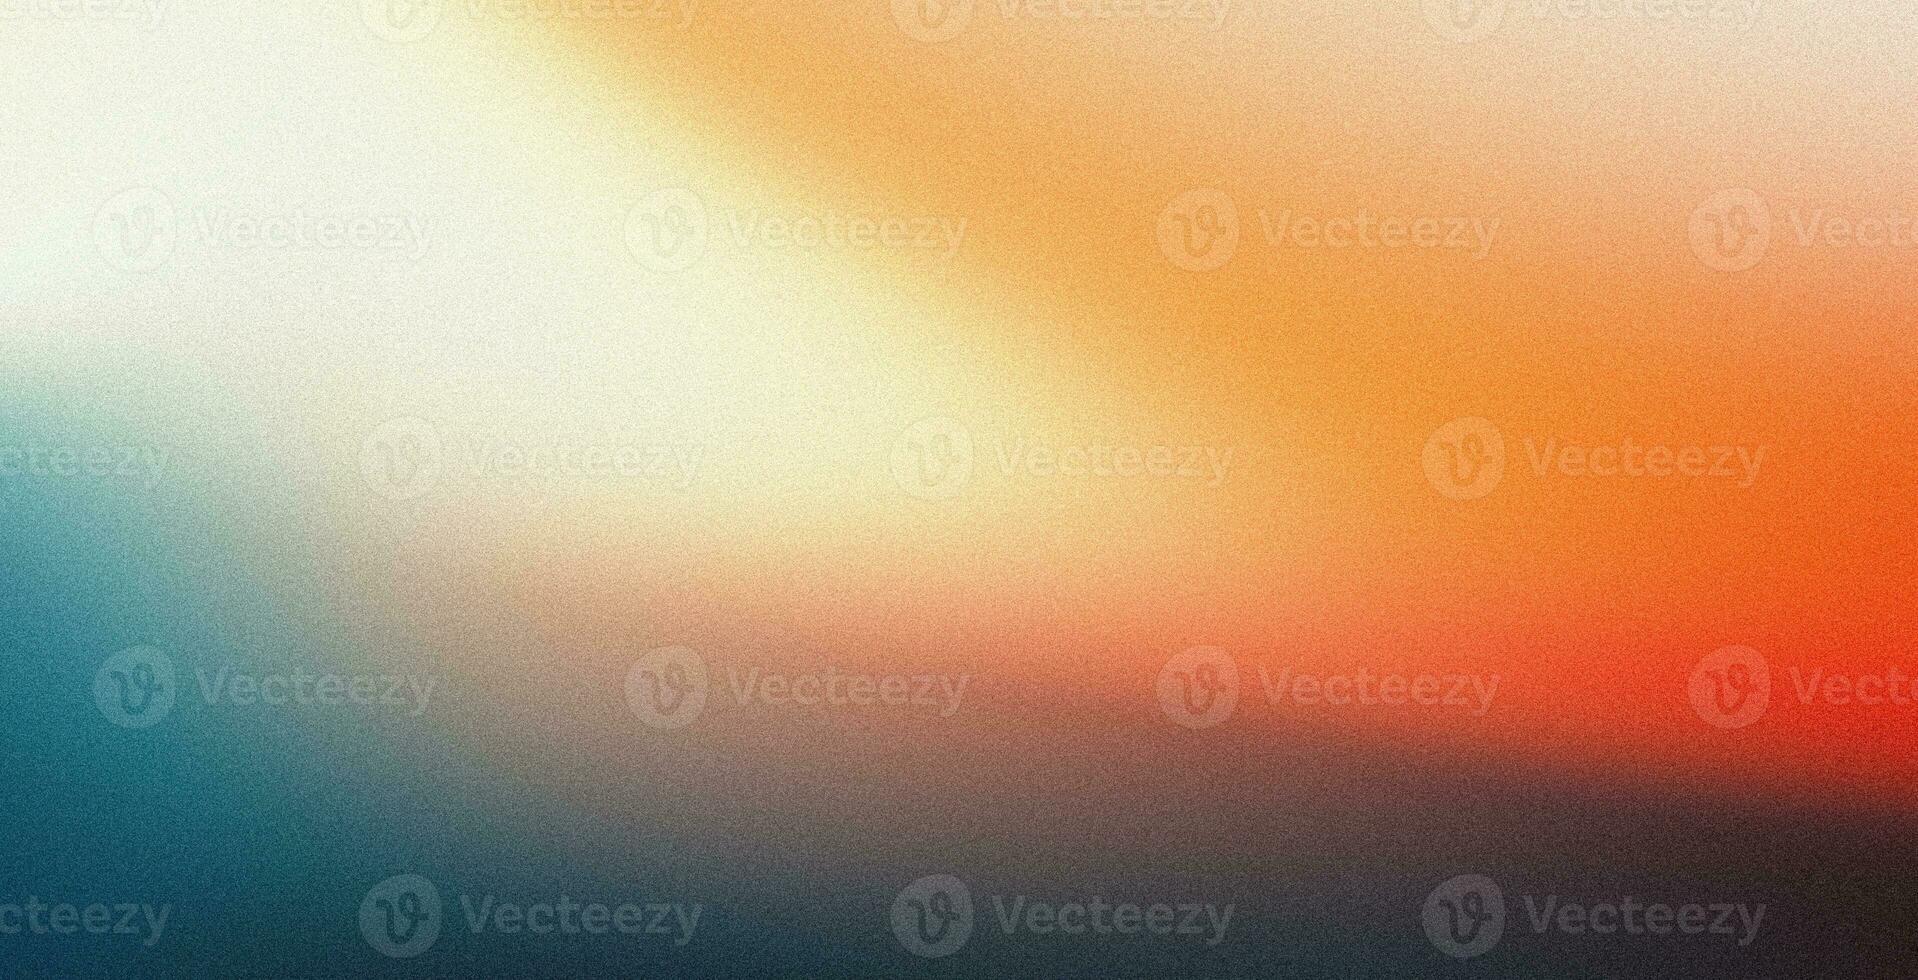 vibrerande kornig lutning bakgrund orange vit blå kricka suddig ljud textur rubrik affisch baner landning sida bakgrund design foto